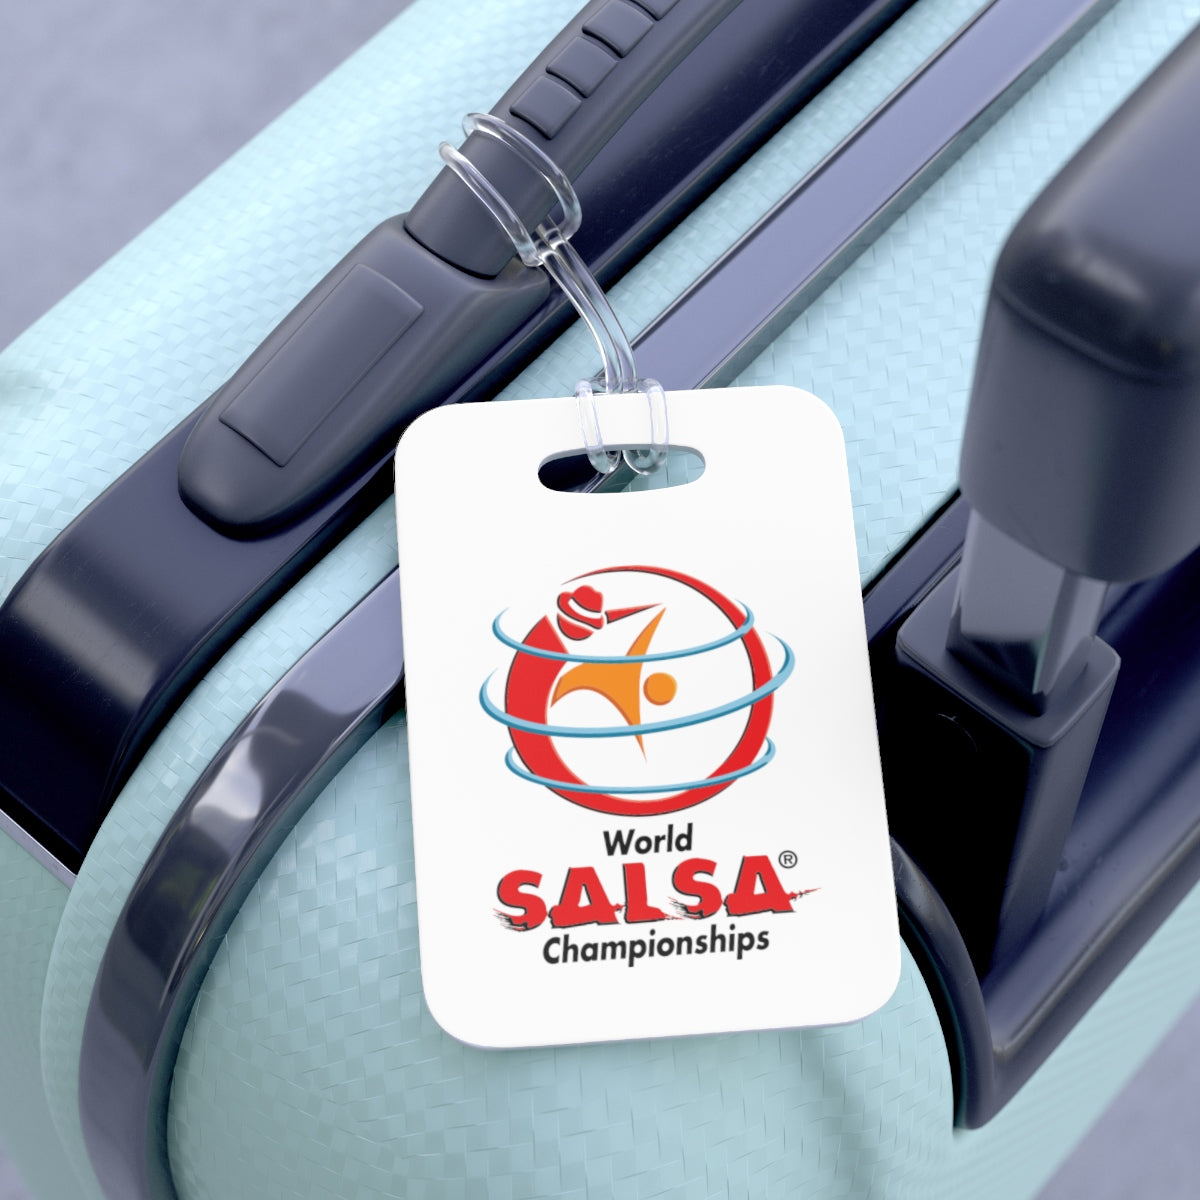 World Salsa Championships Bag Tag - World Salsa Championships